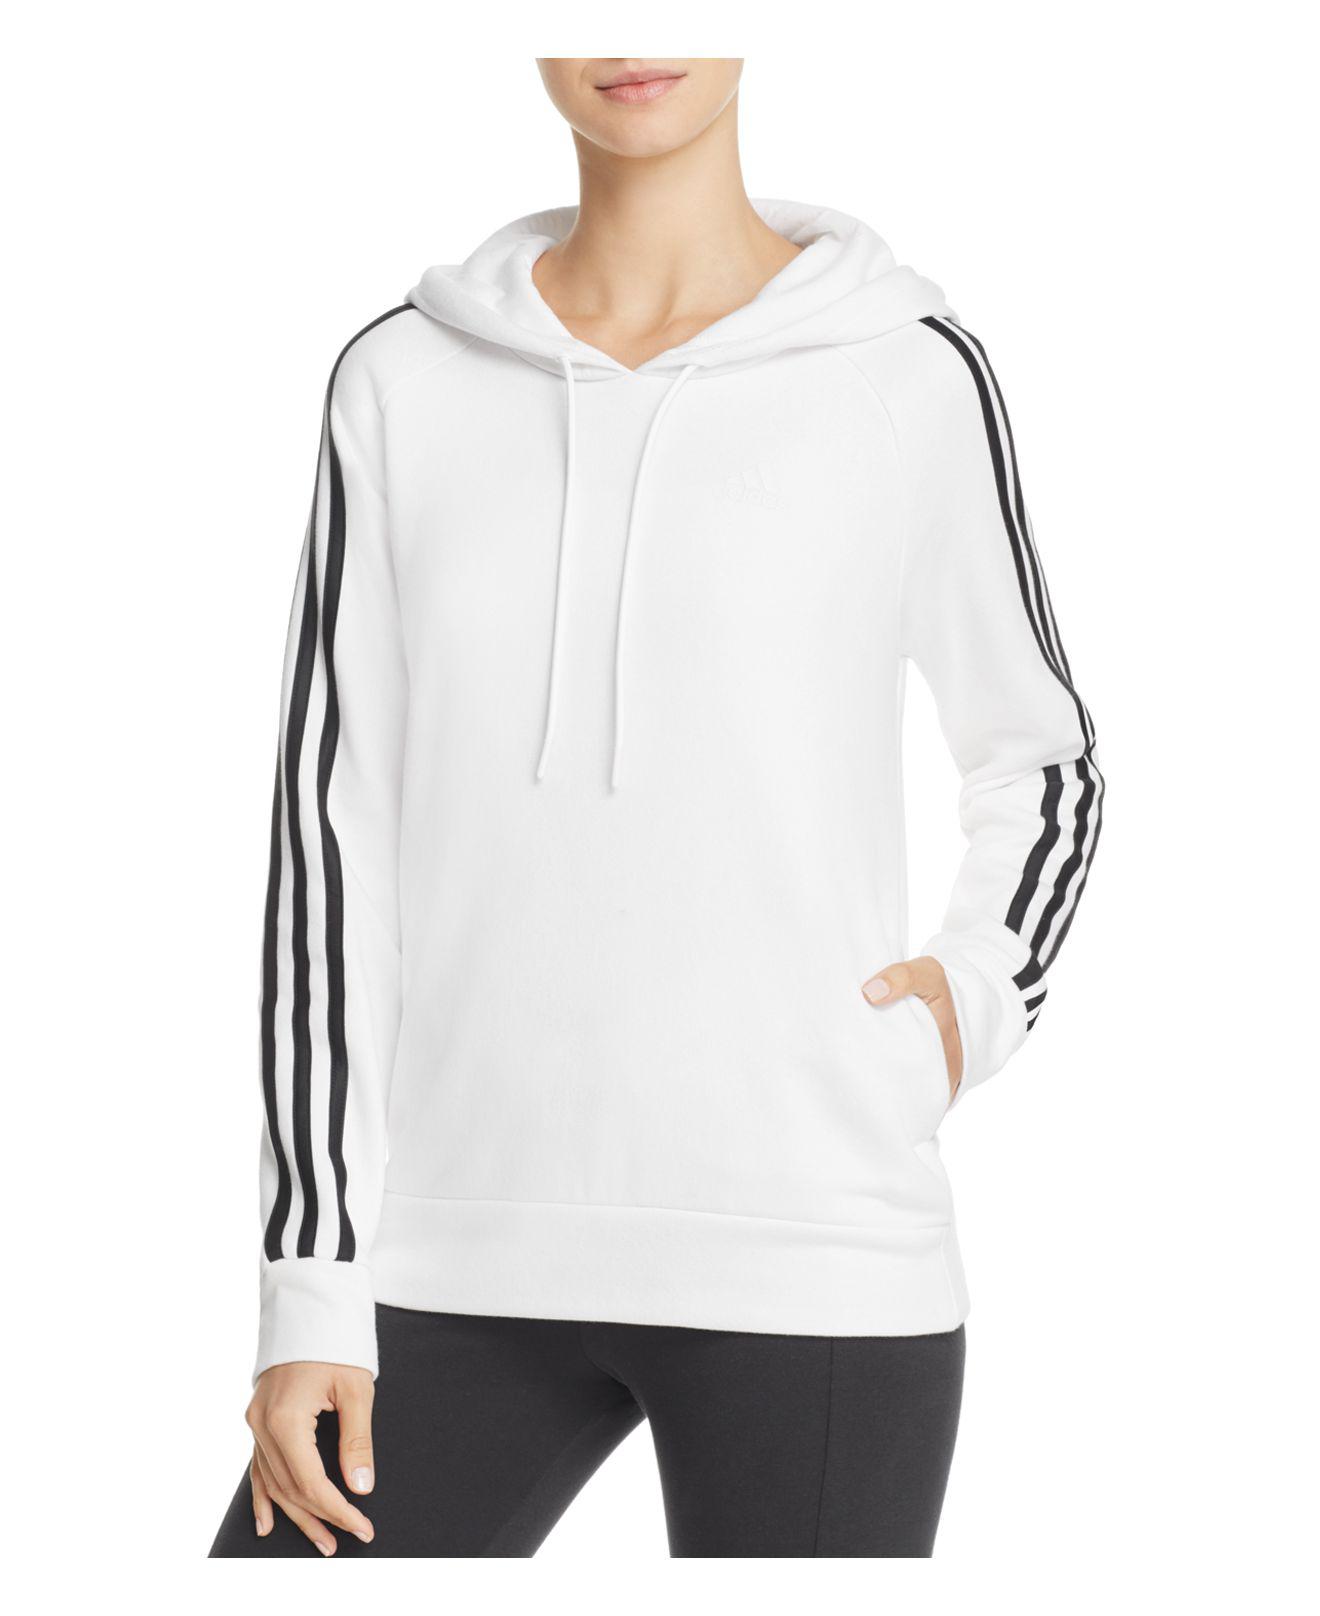 white adidas hoodie with black stripes